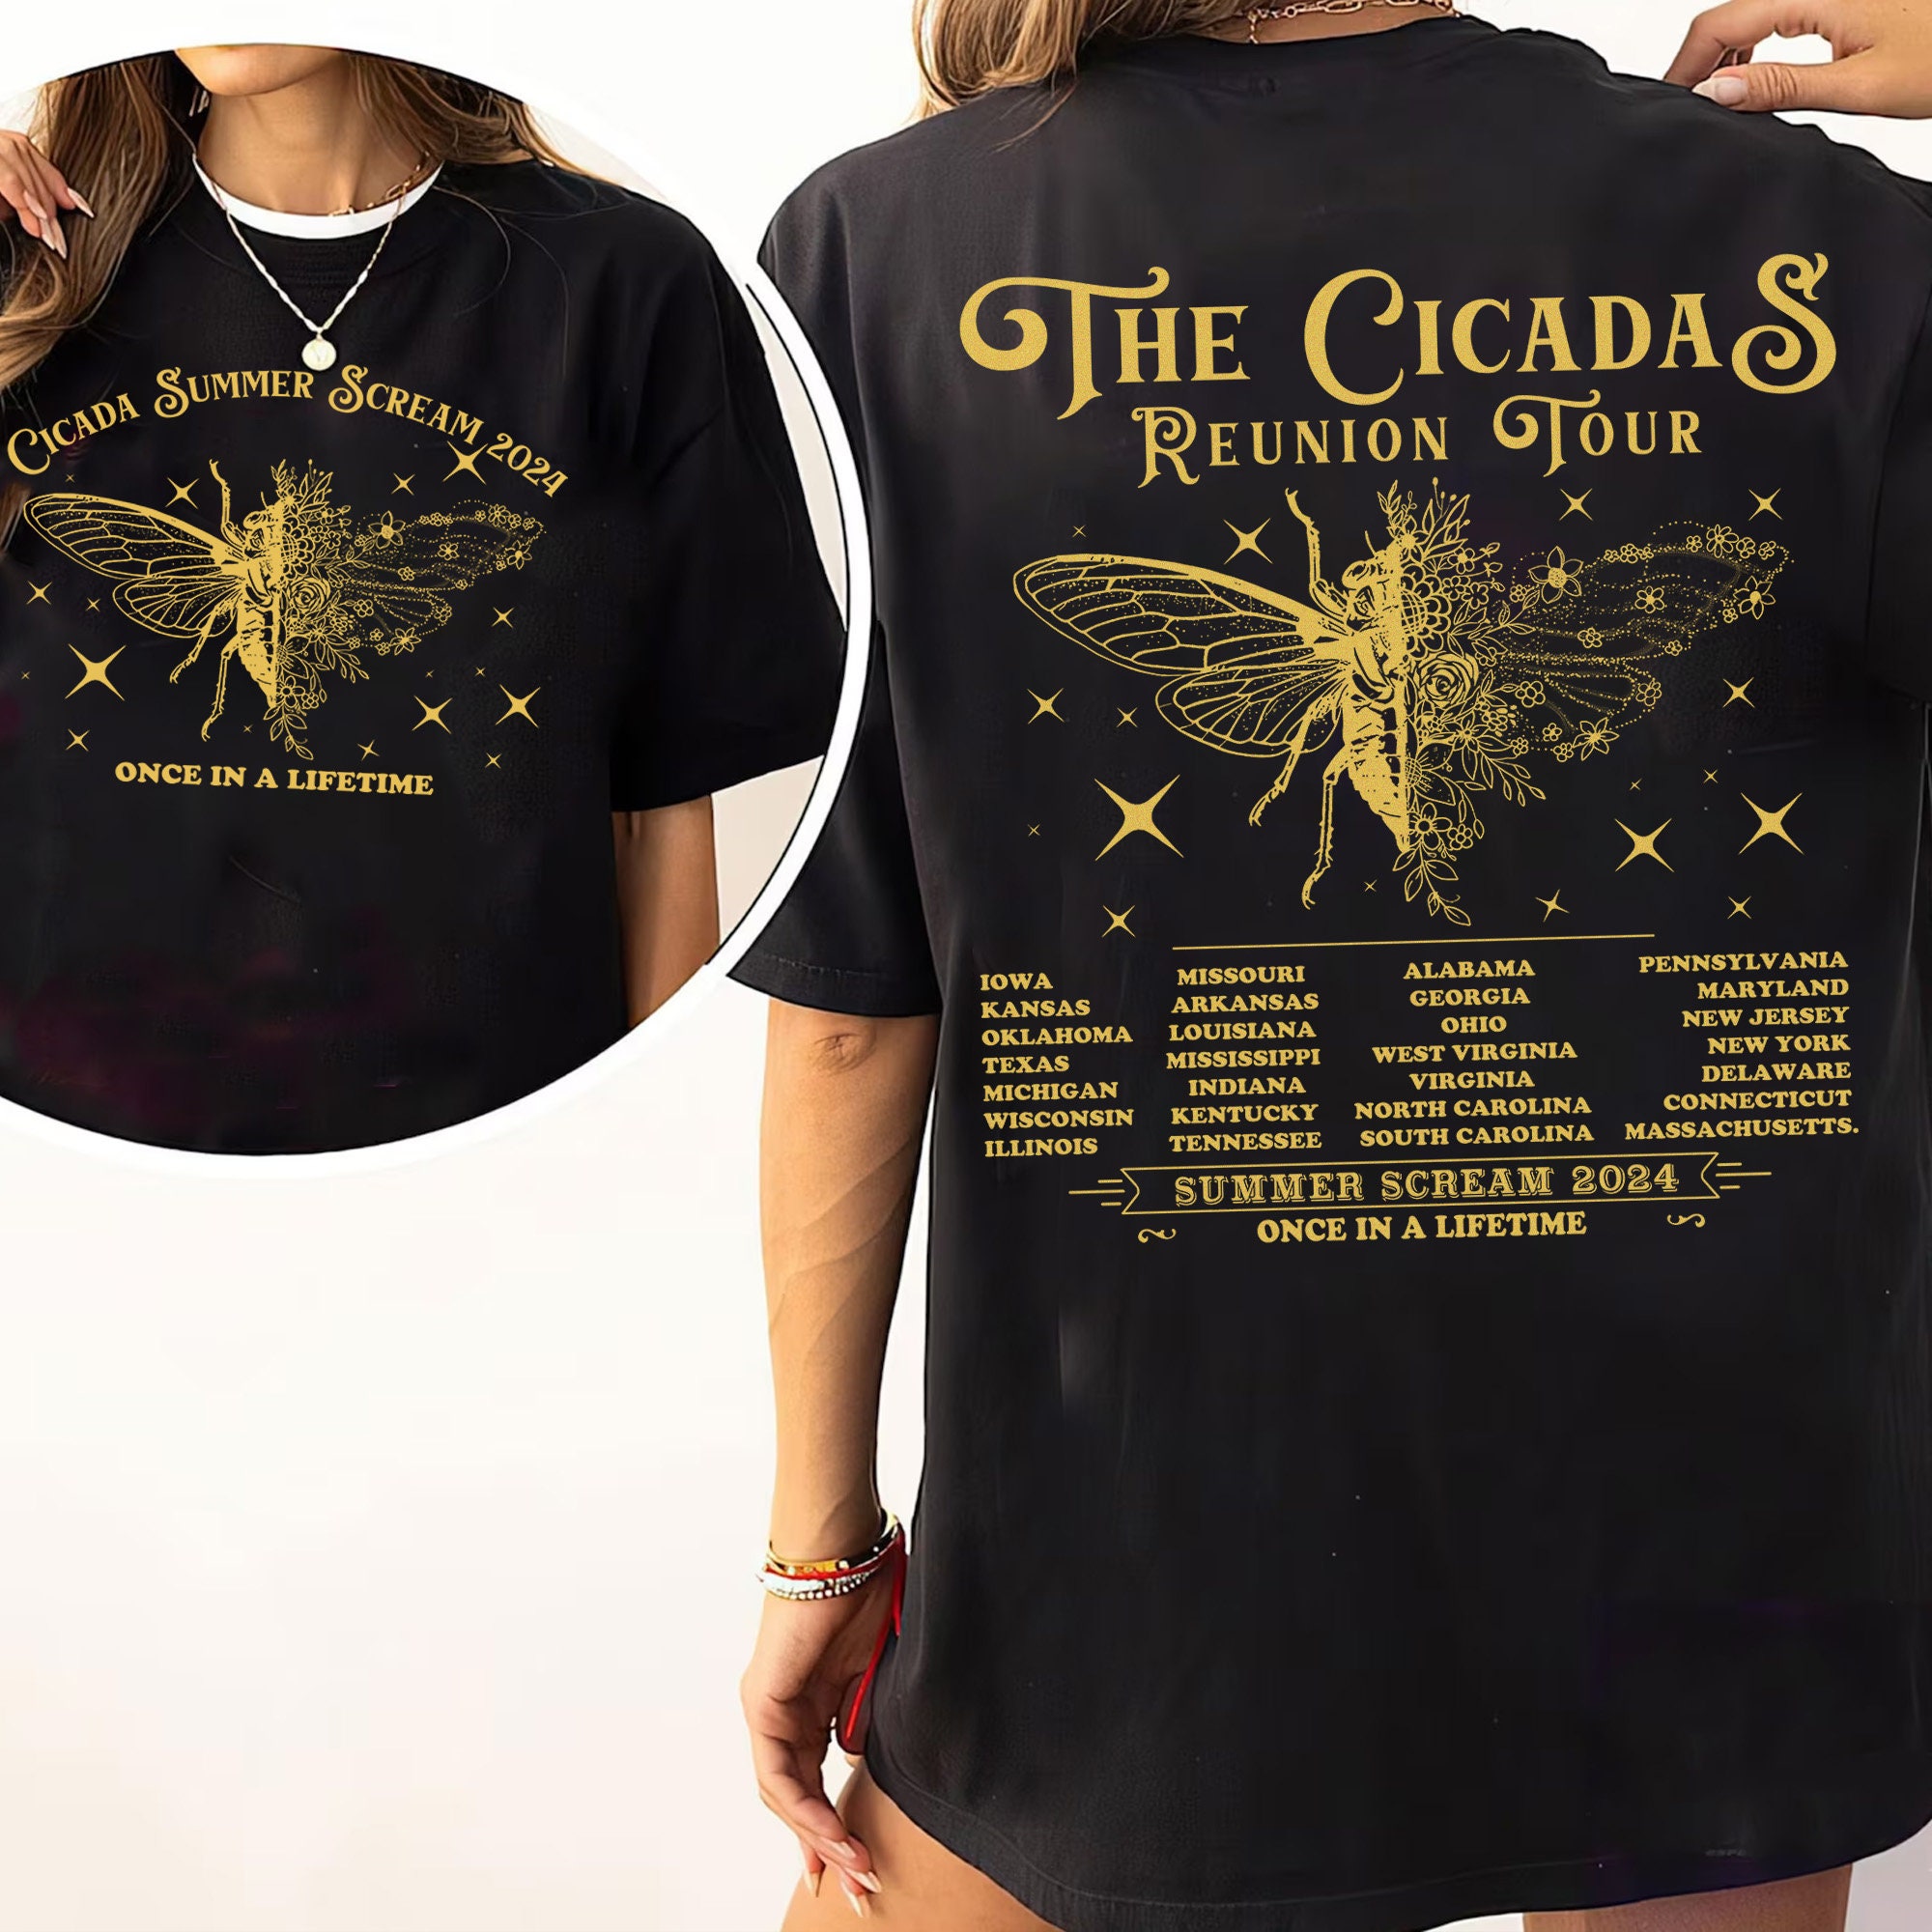 Cicadas Summer Scream Reunion Tour 2024 Shirt, The Cicada Concert Tour,Insect Cicada Broods XIII & XIX, Once In a Lifetime